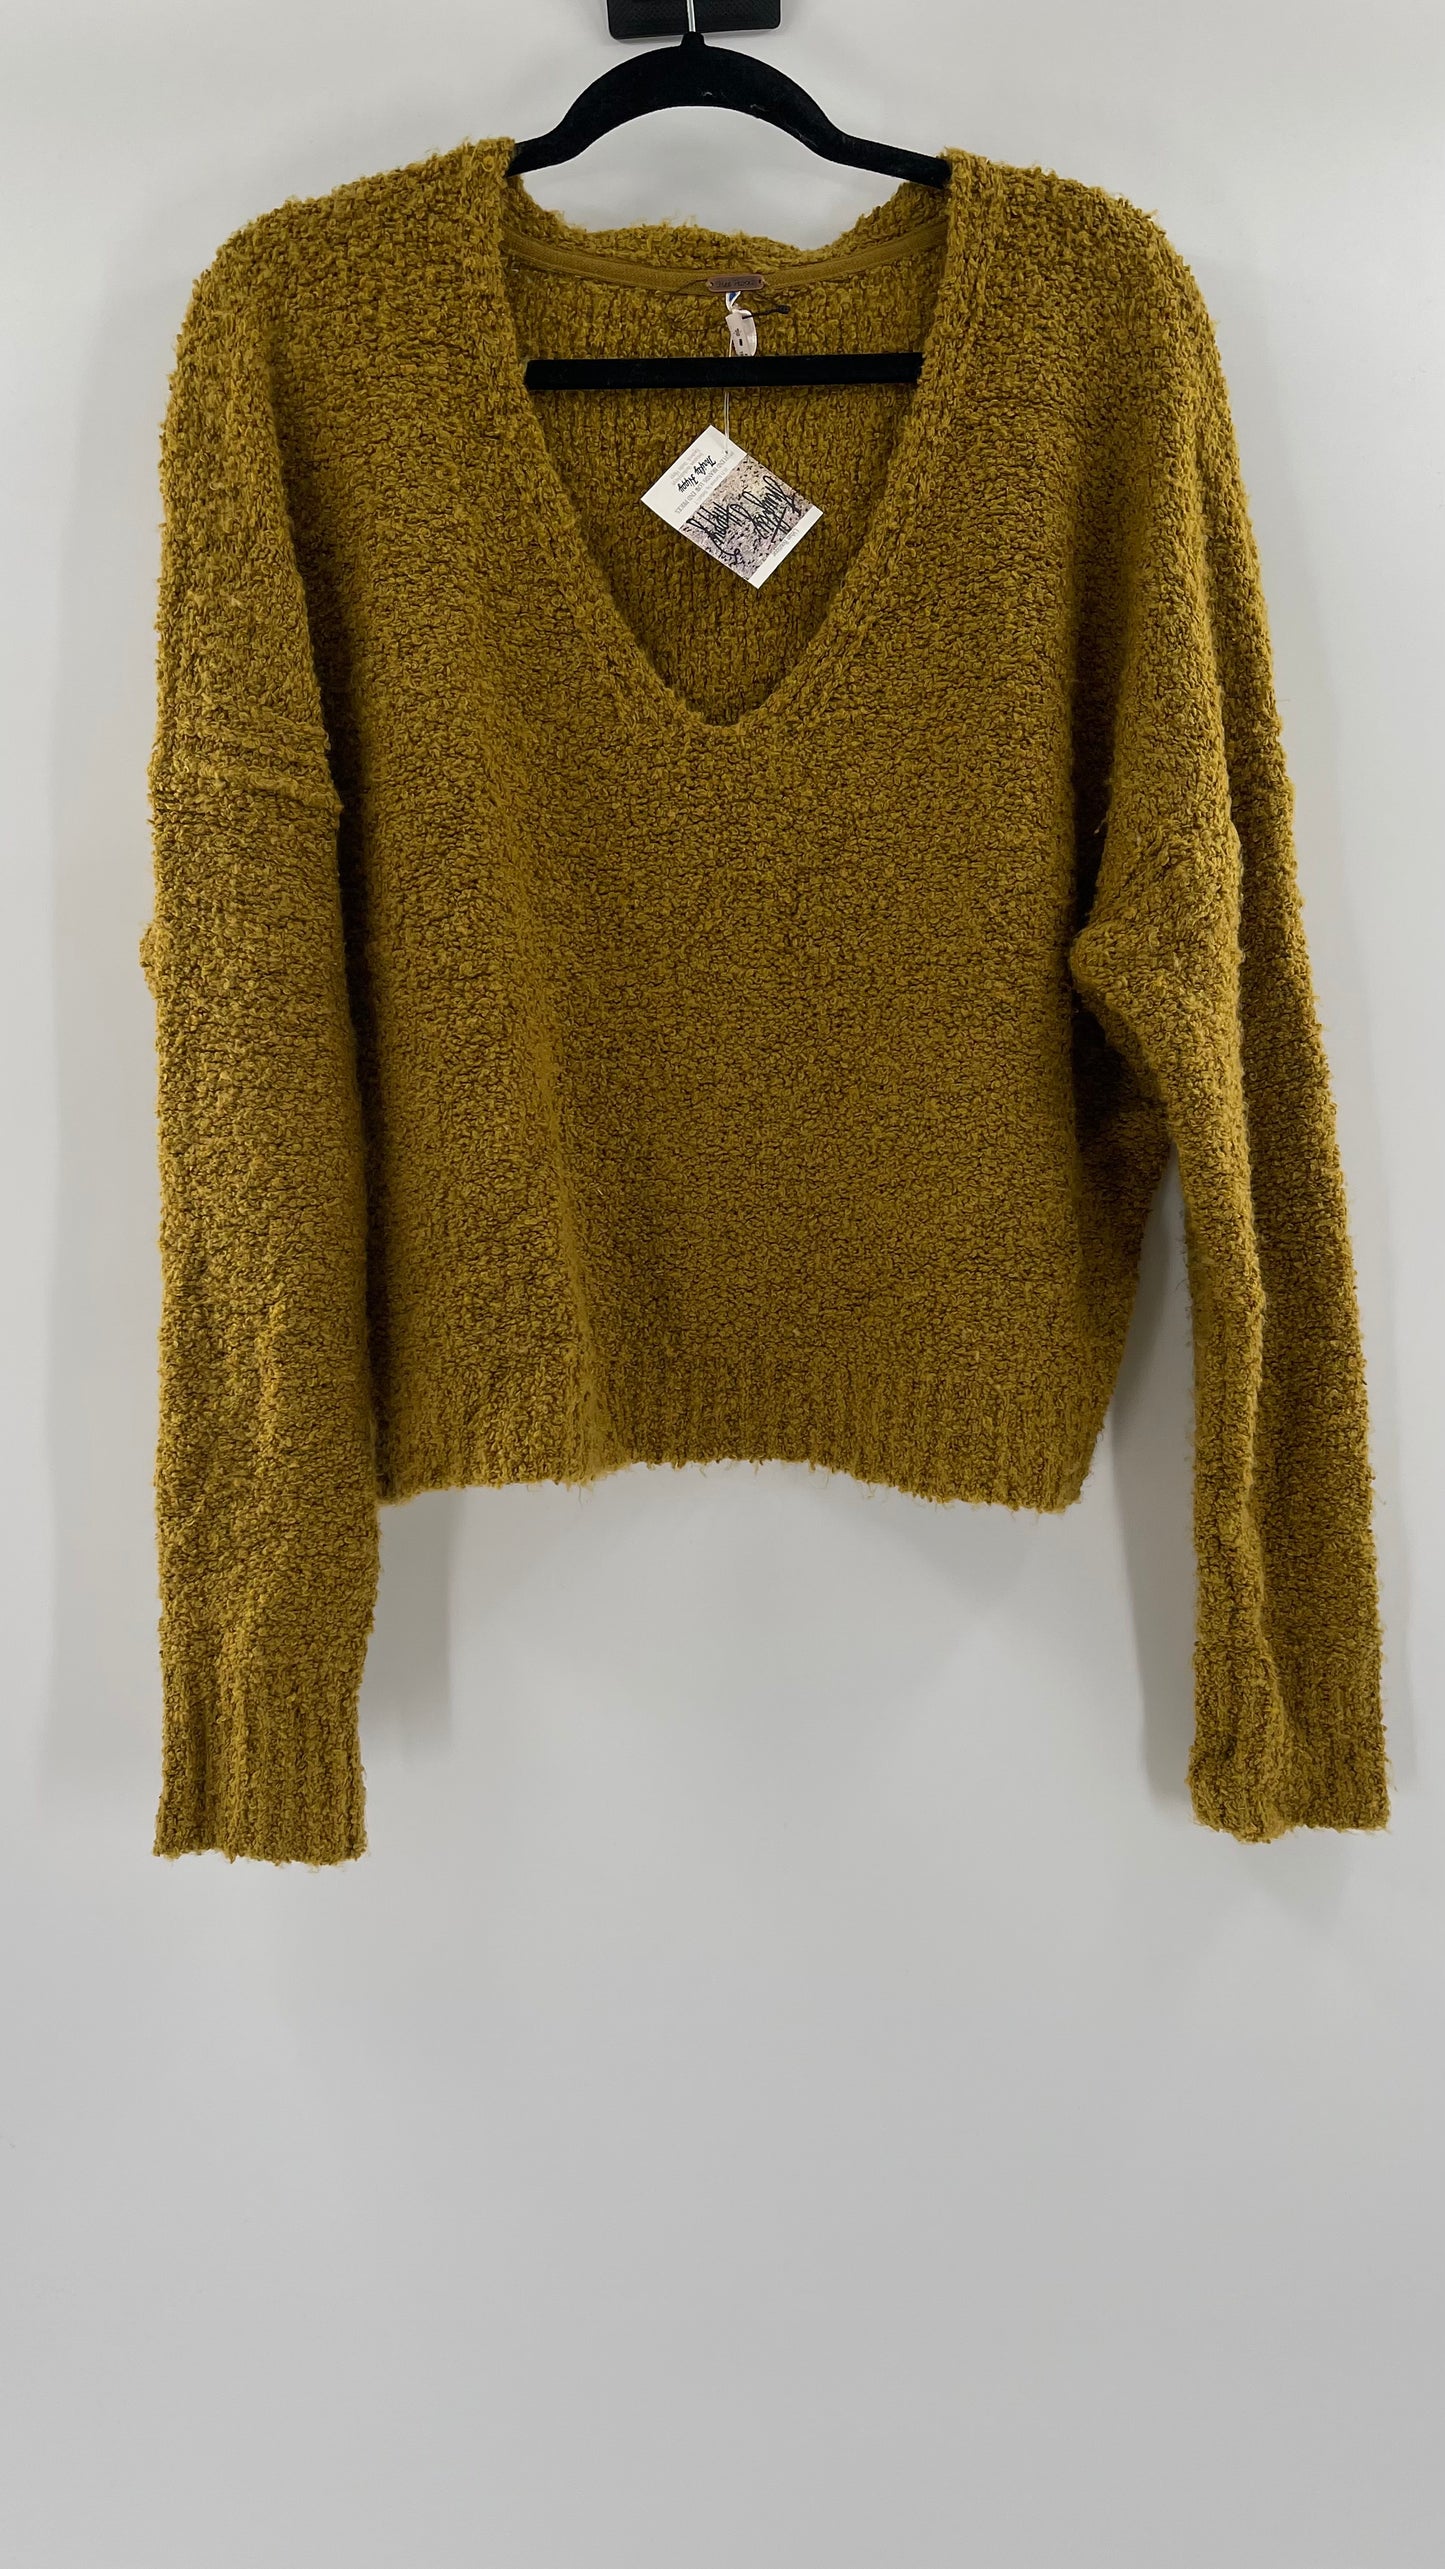 Free People Mustard Yellow Sweater (S)